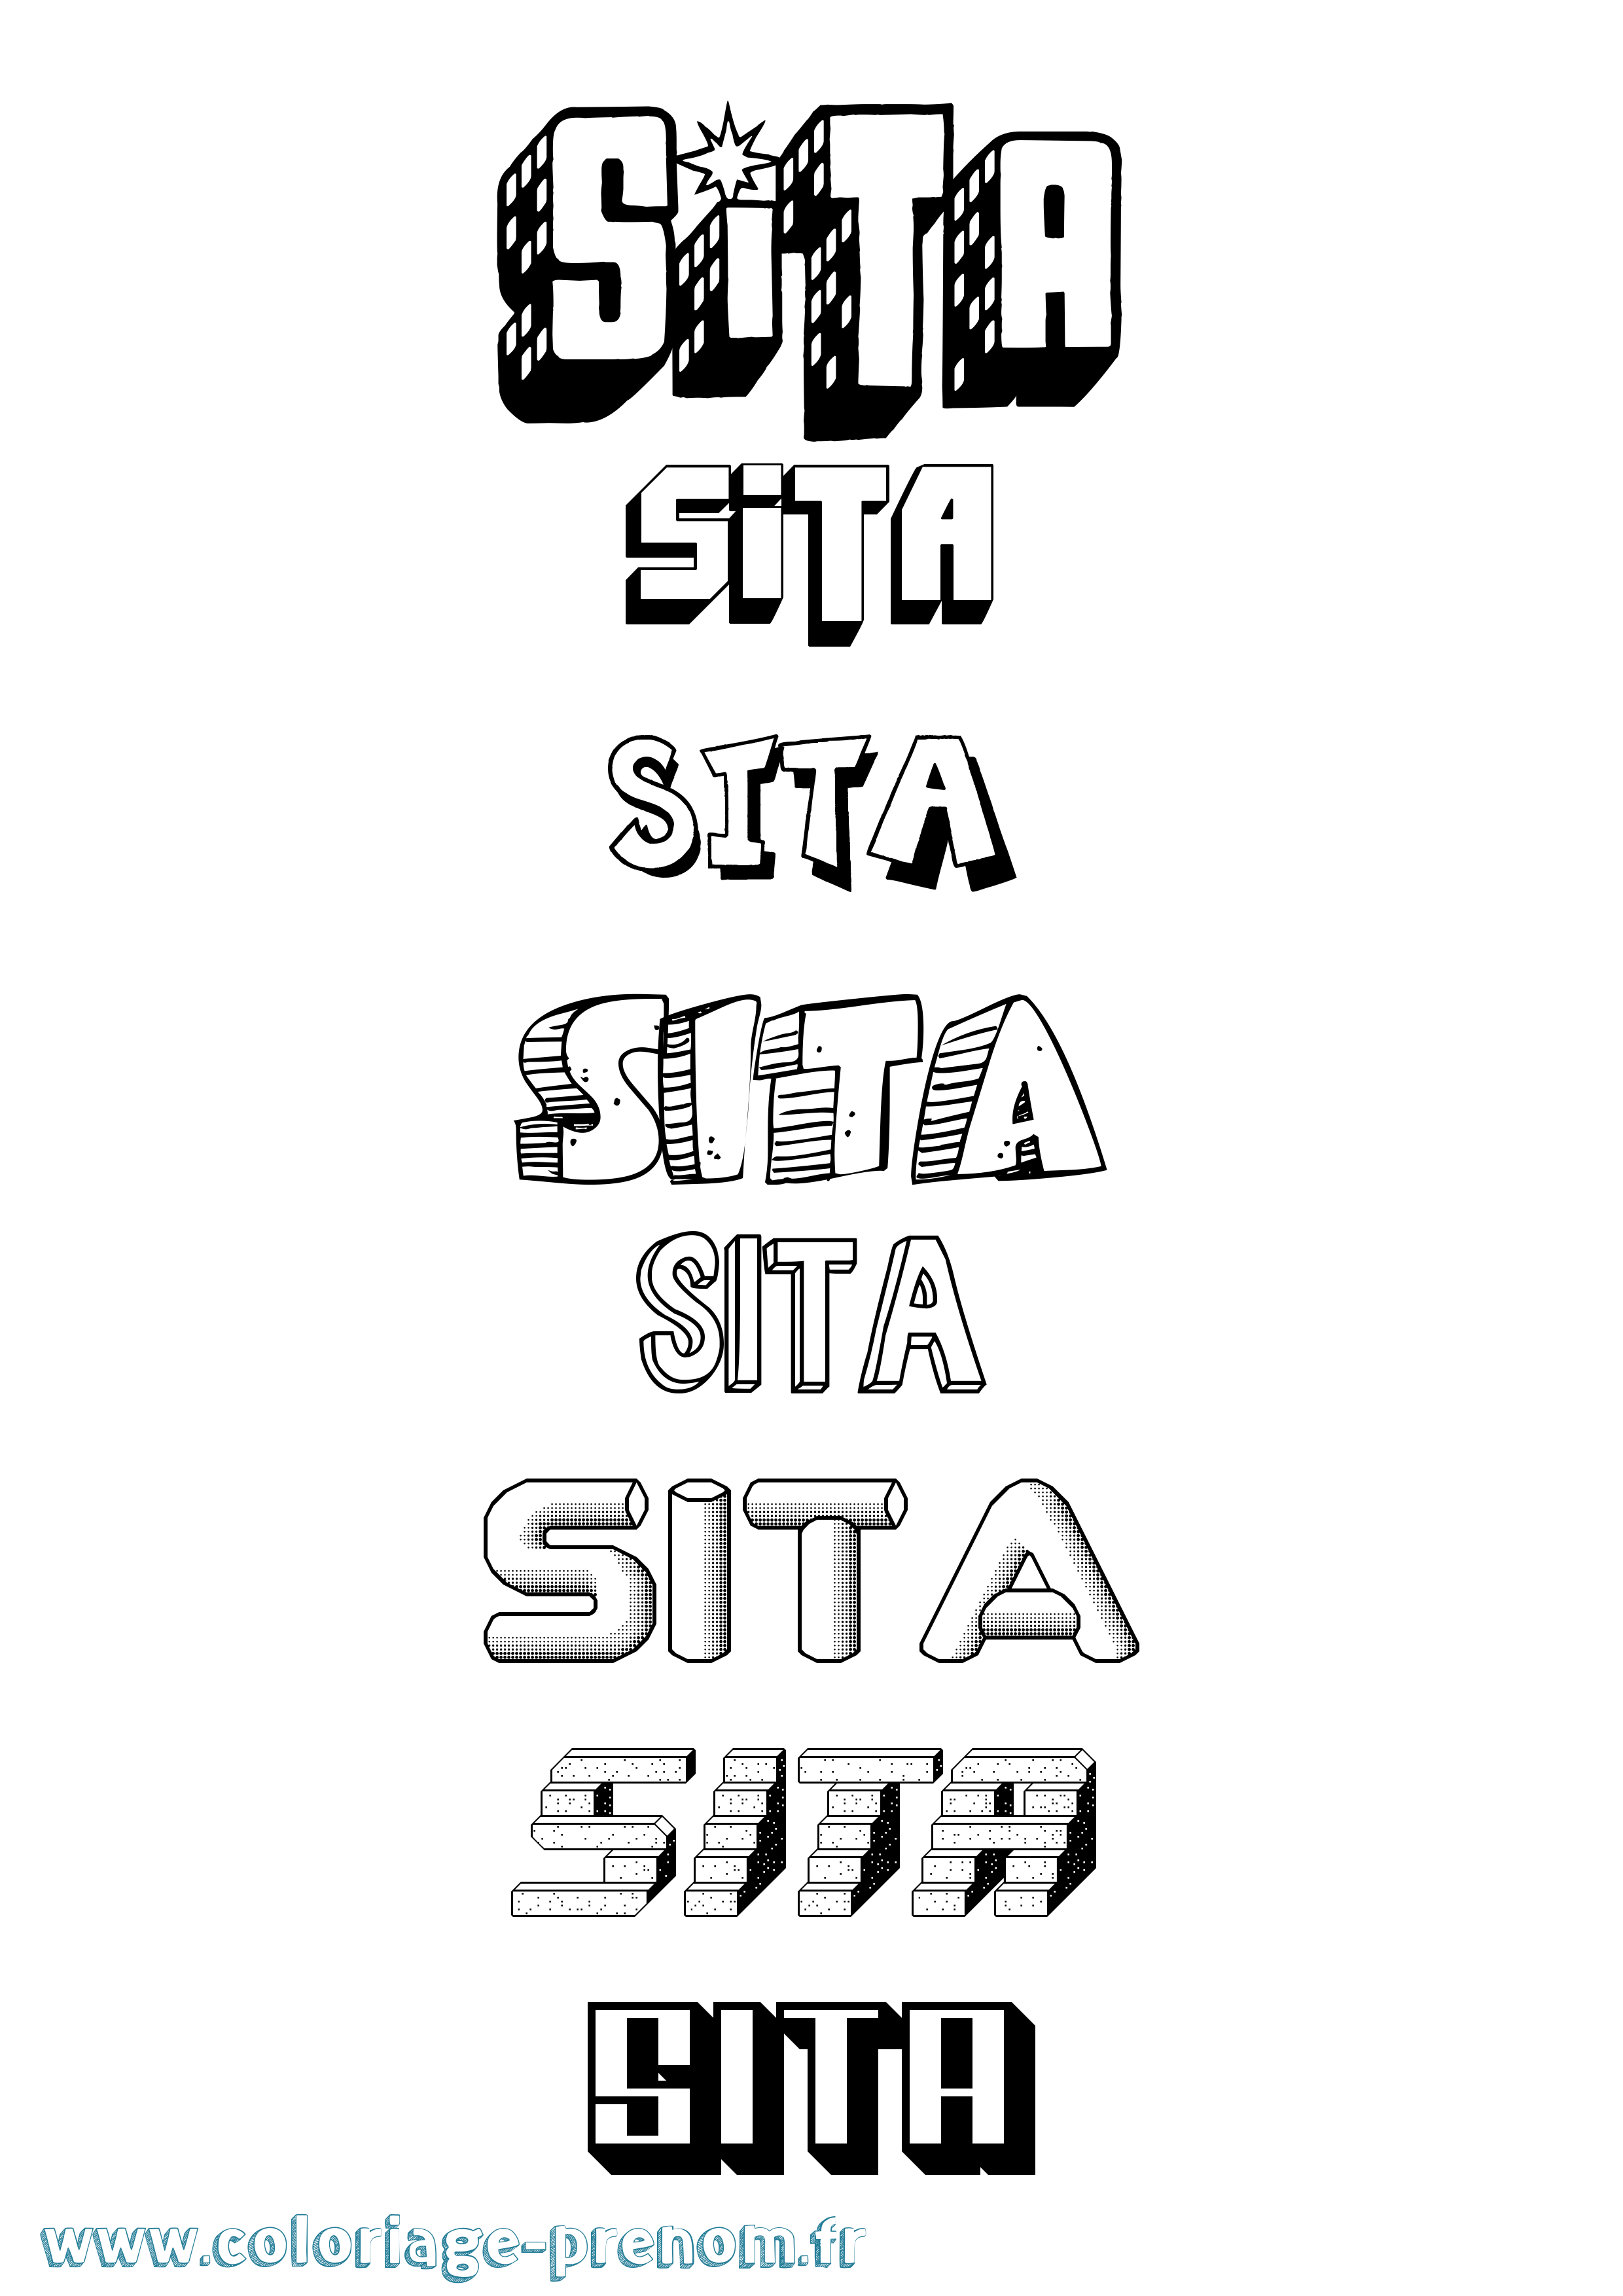 Coloriage prénom Sita Effet 3D